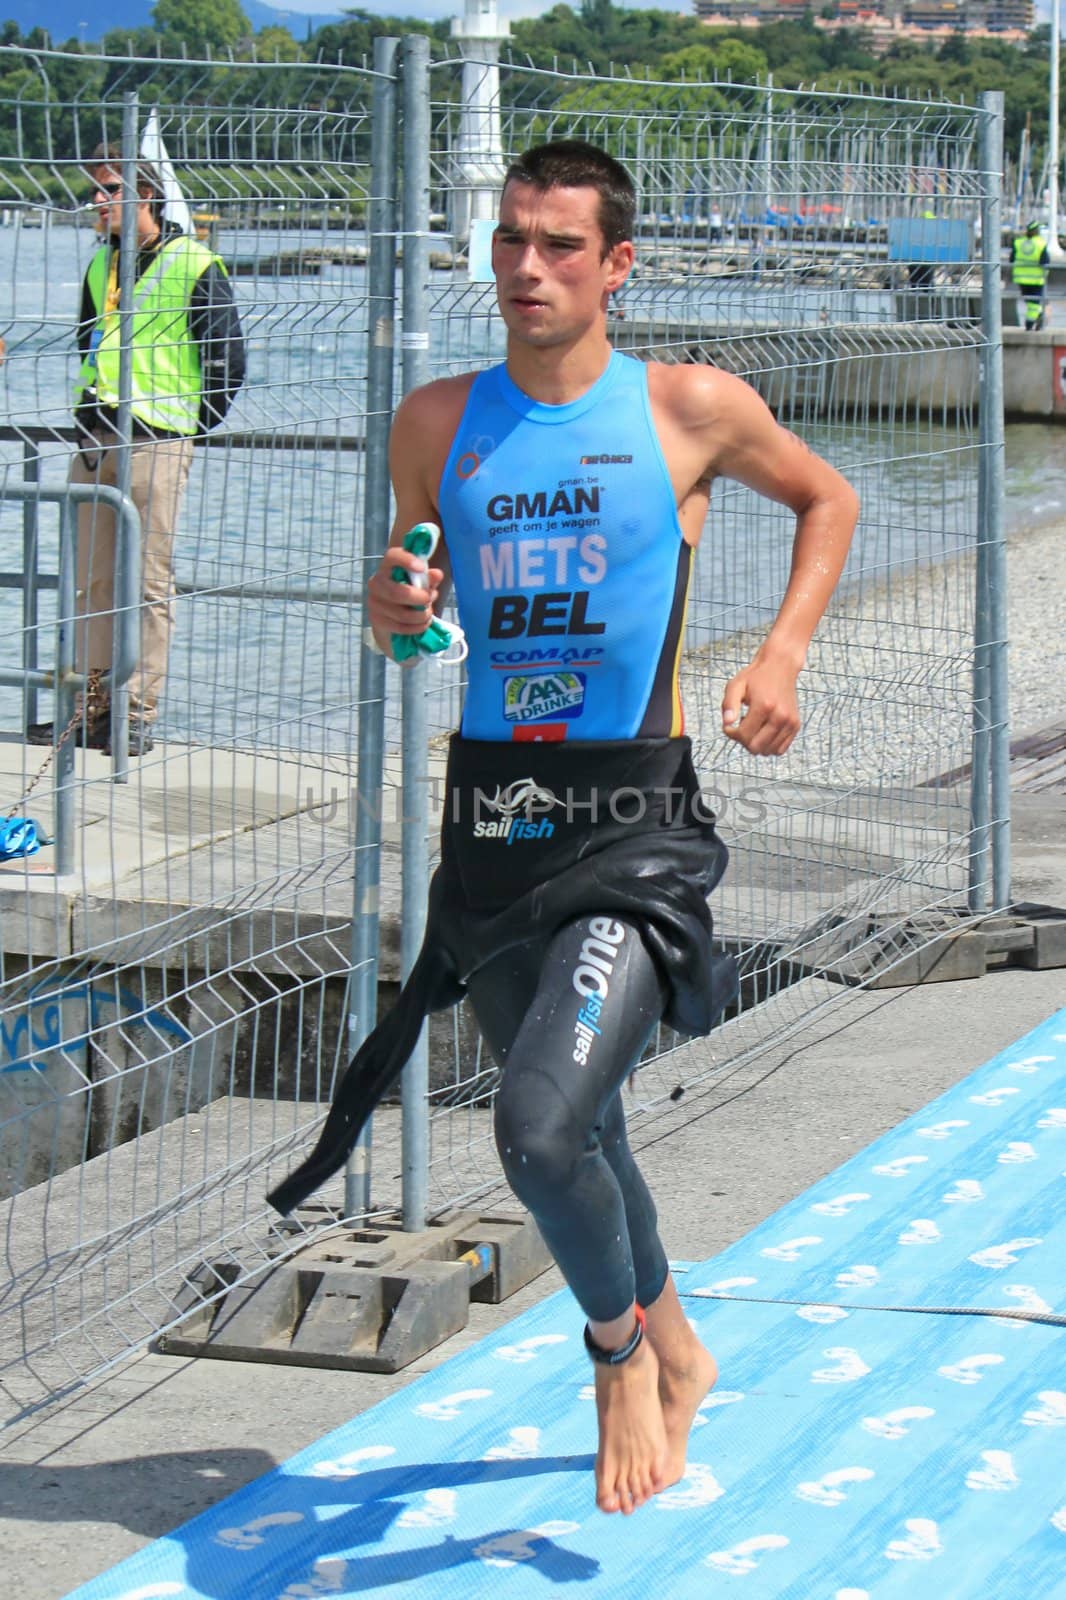 Male runner in the transition area after the swim race at the Geneva International triathlon, on July 24, 2011, Geneva, Switzerland